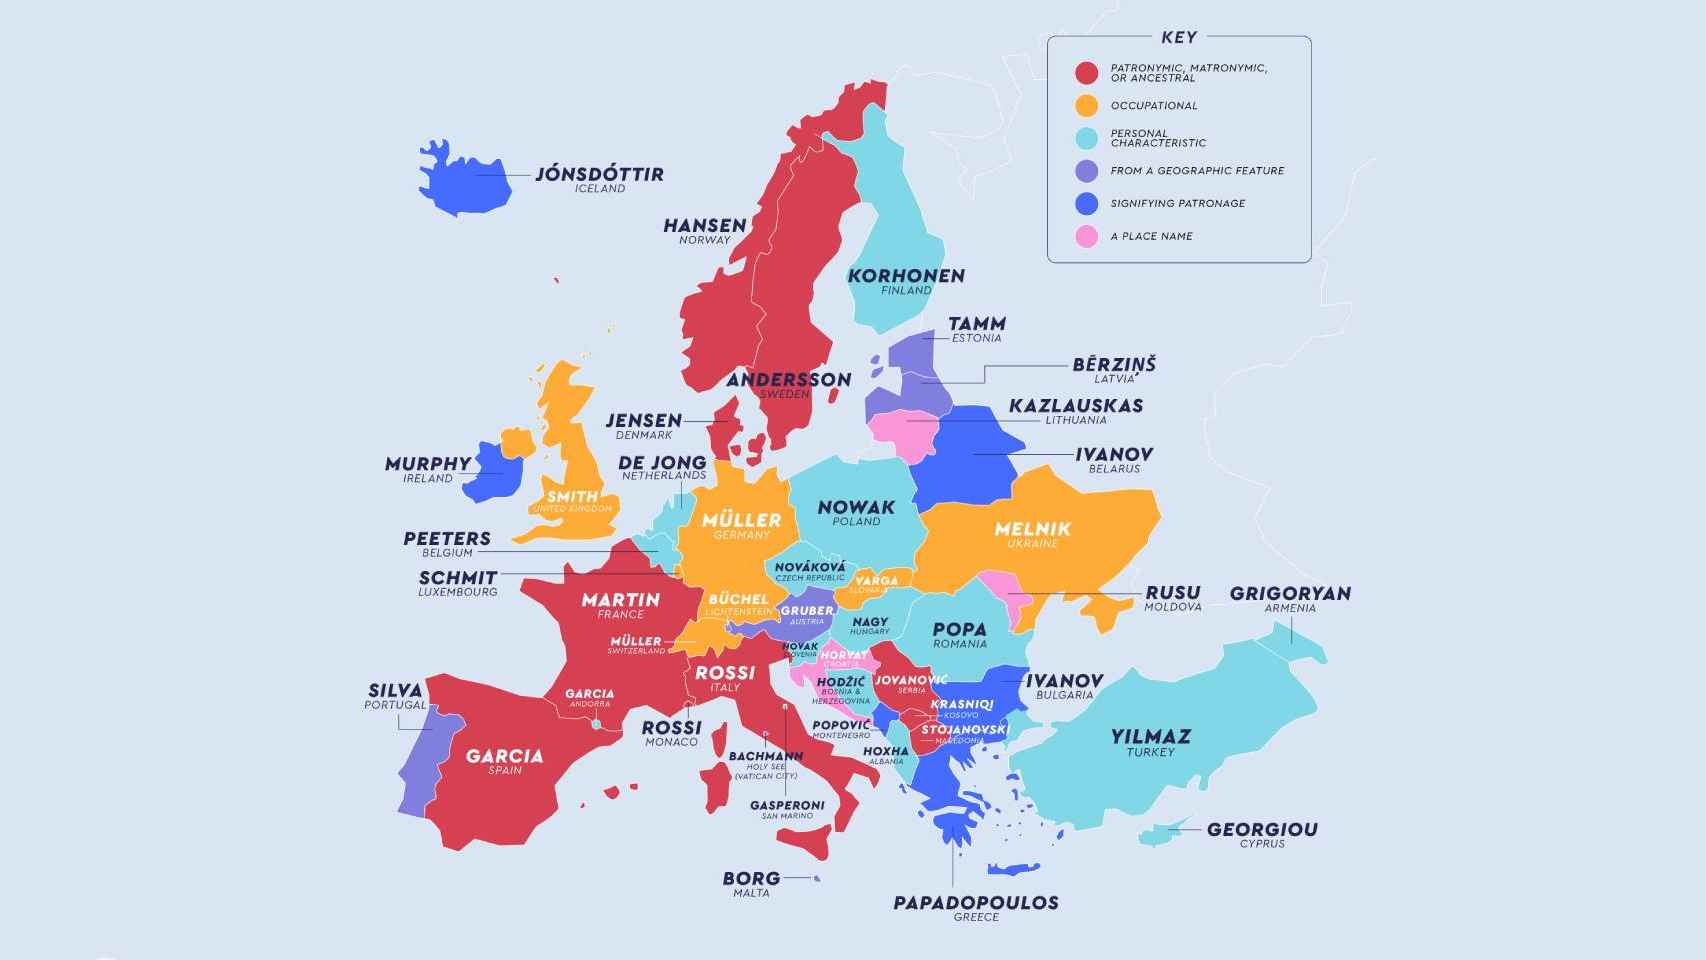 Apellidos más comunes en Europa.